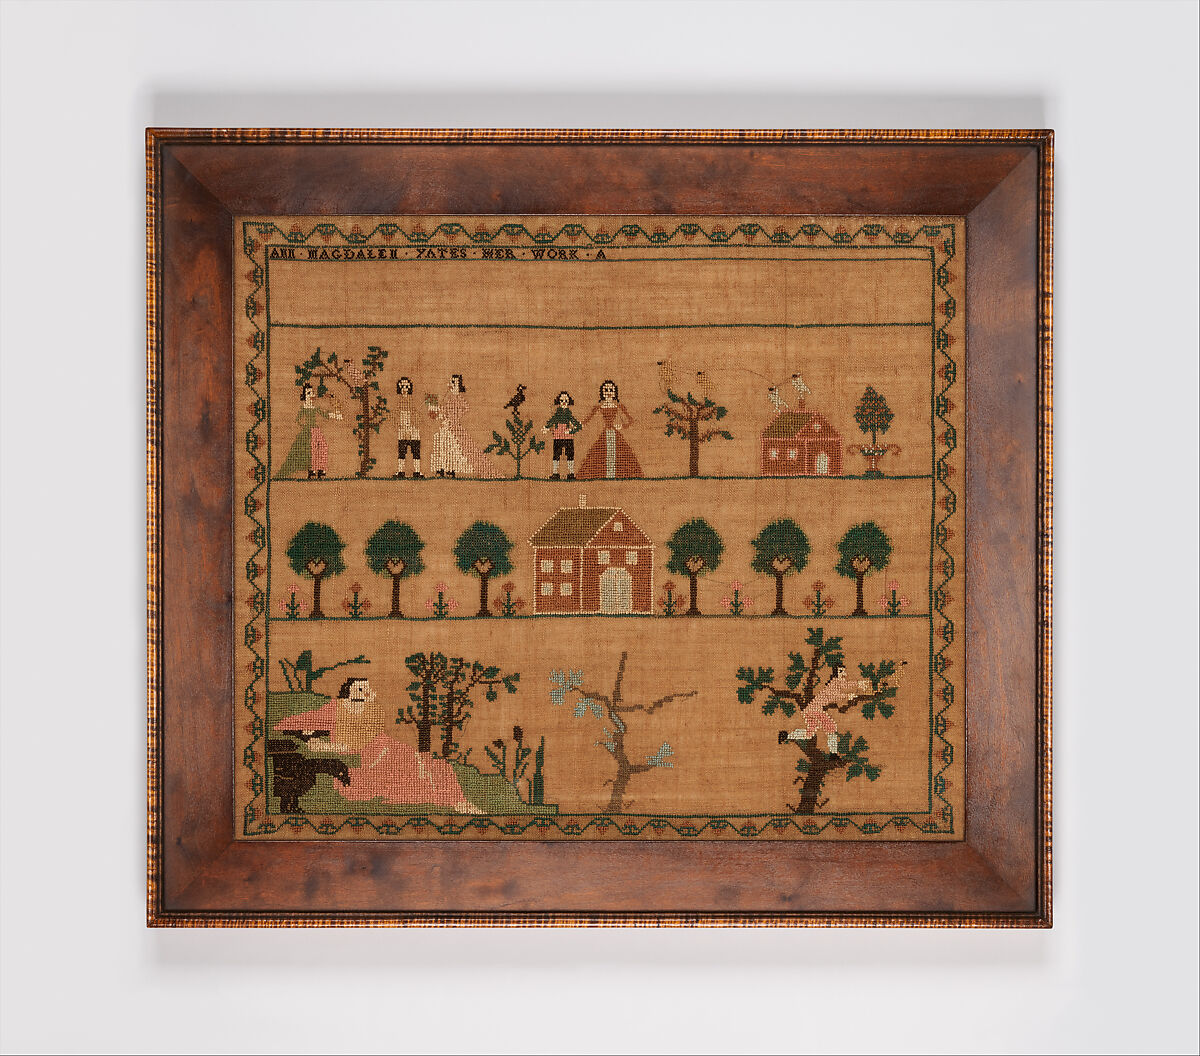 Biblical Sampler, Ann Magdalen Yates (American, born 1790), Silk embroidery on linen 